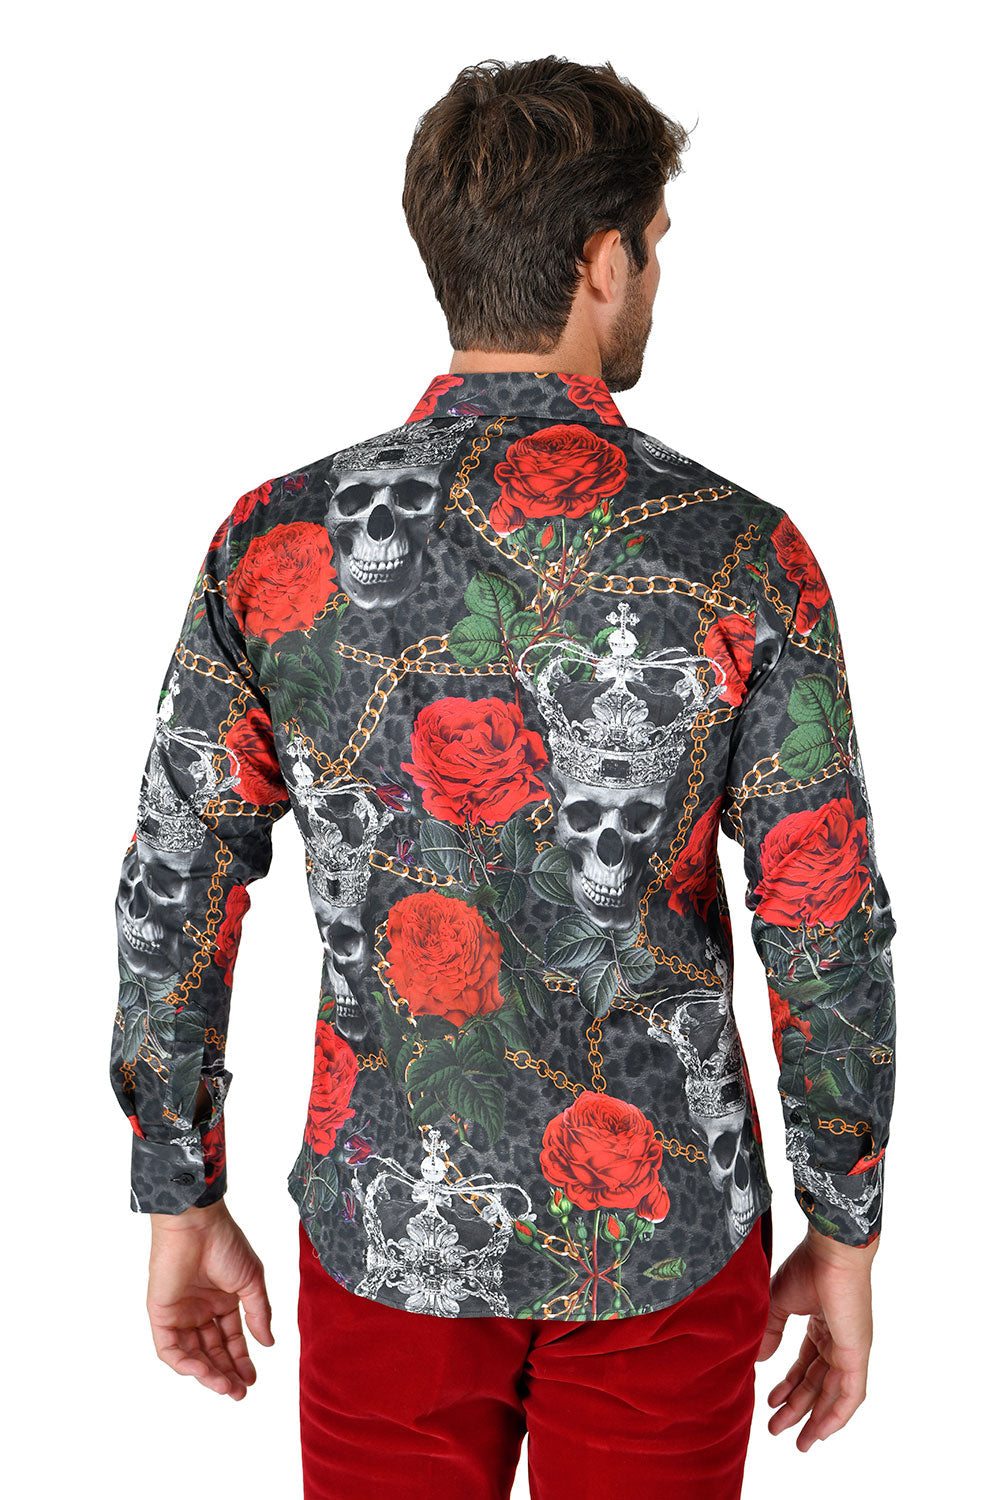 BARABAS Men's Printed Skull Chain Floral Rose Crown Shirts SP264